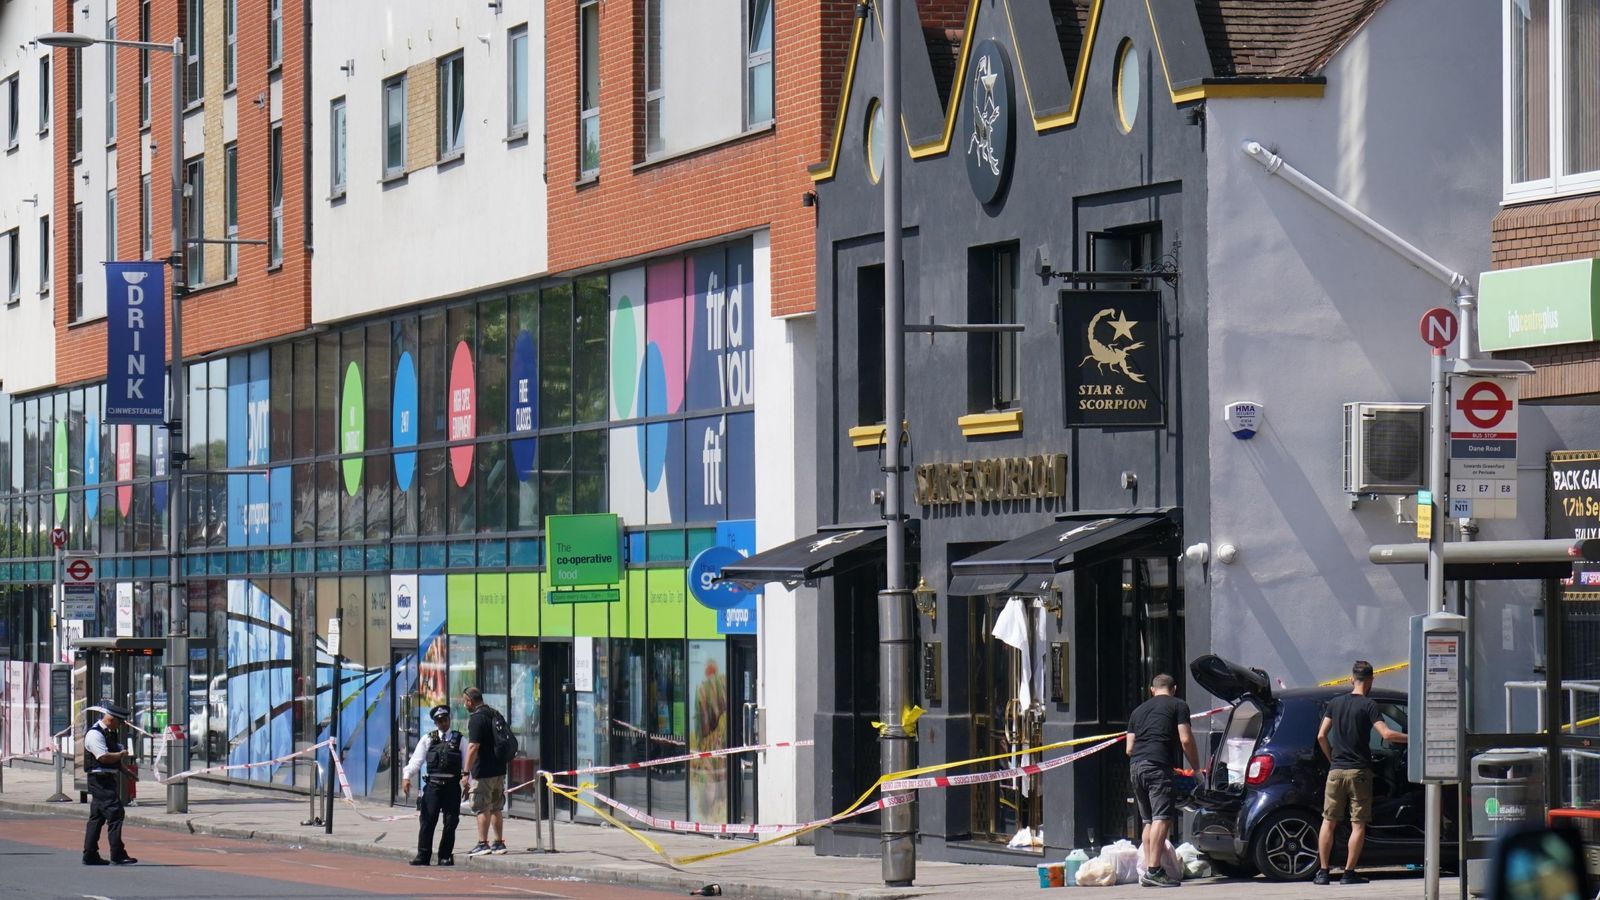 Man arrested over fatal stabbing in west London pub | UK News